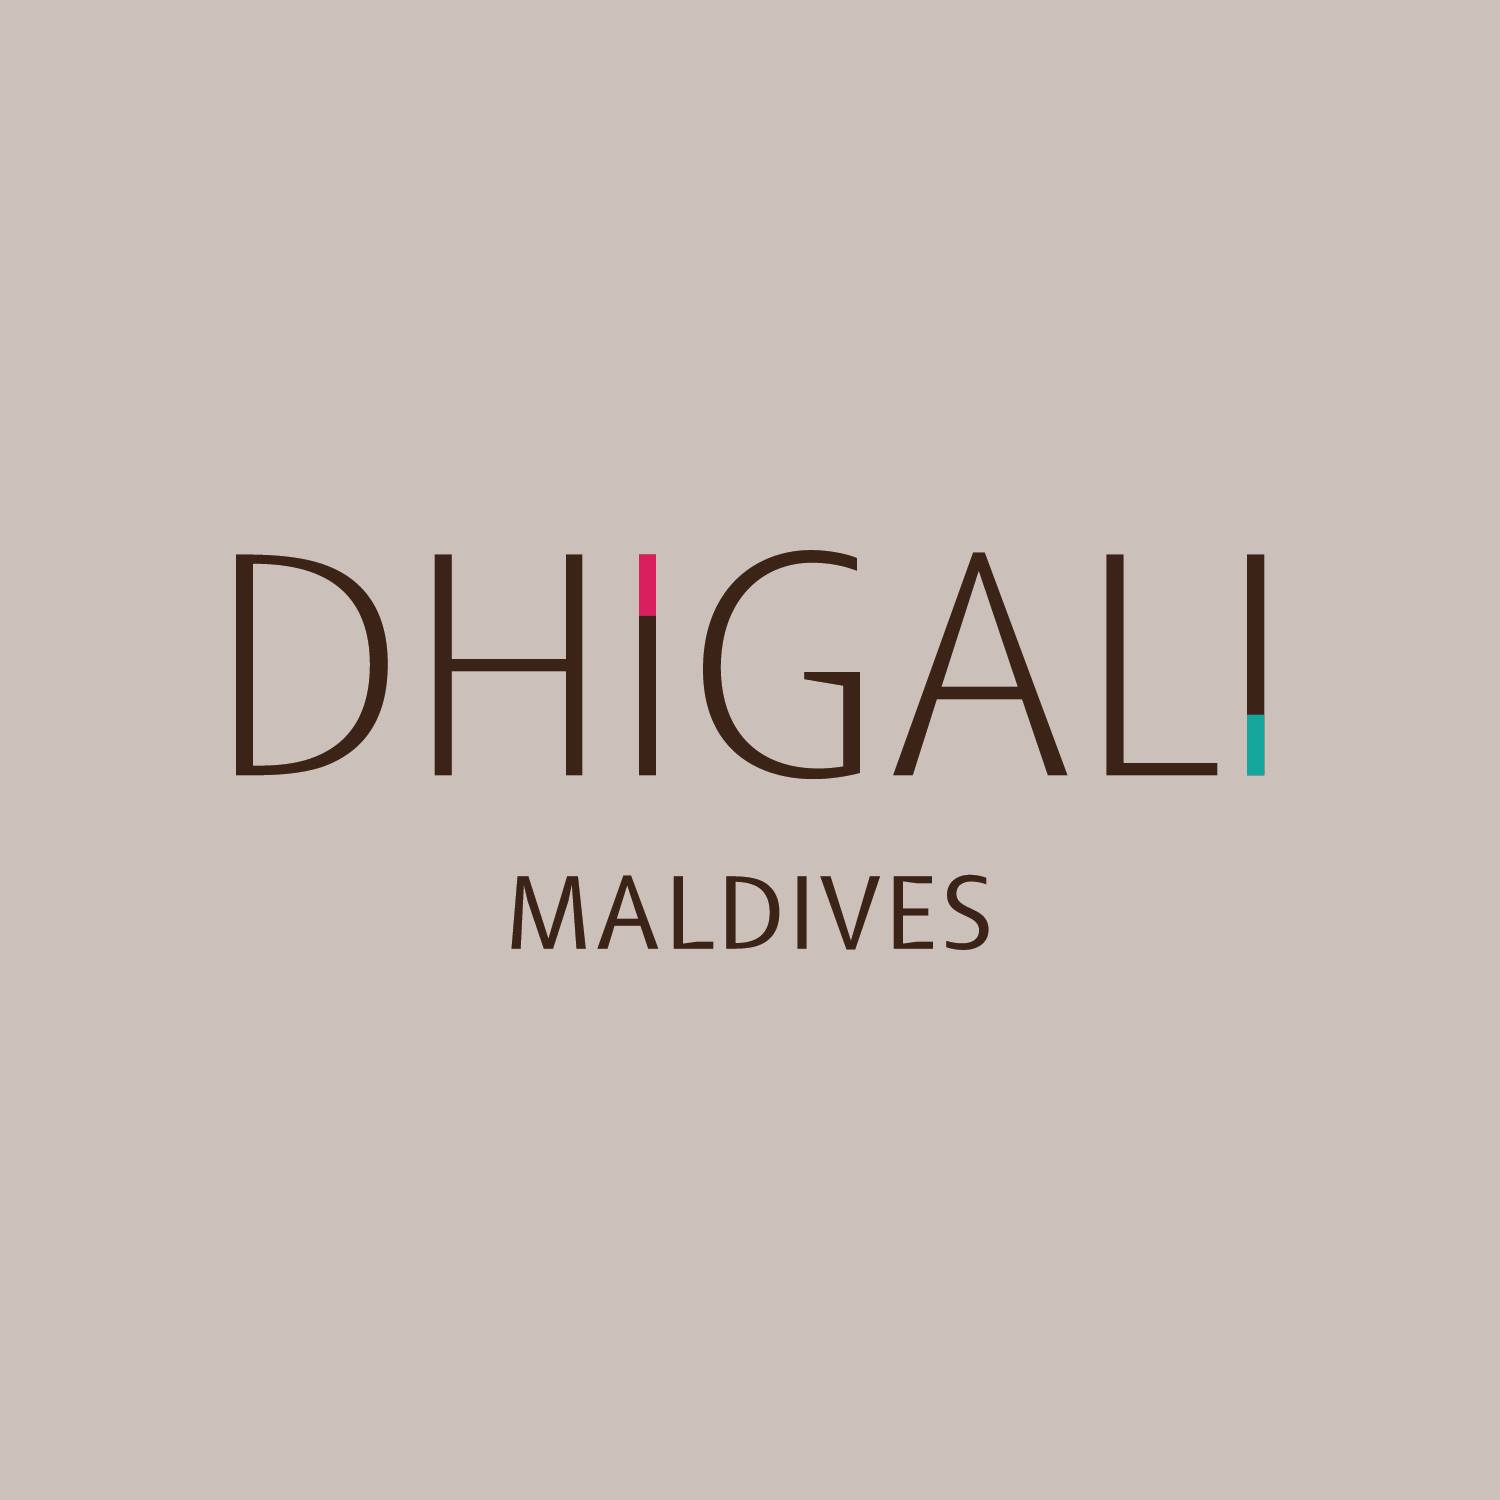 Image result for DHIGALI MALDIVES